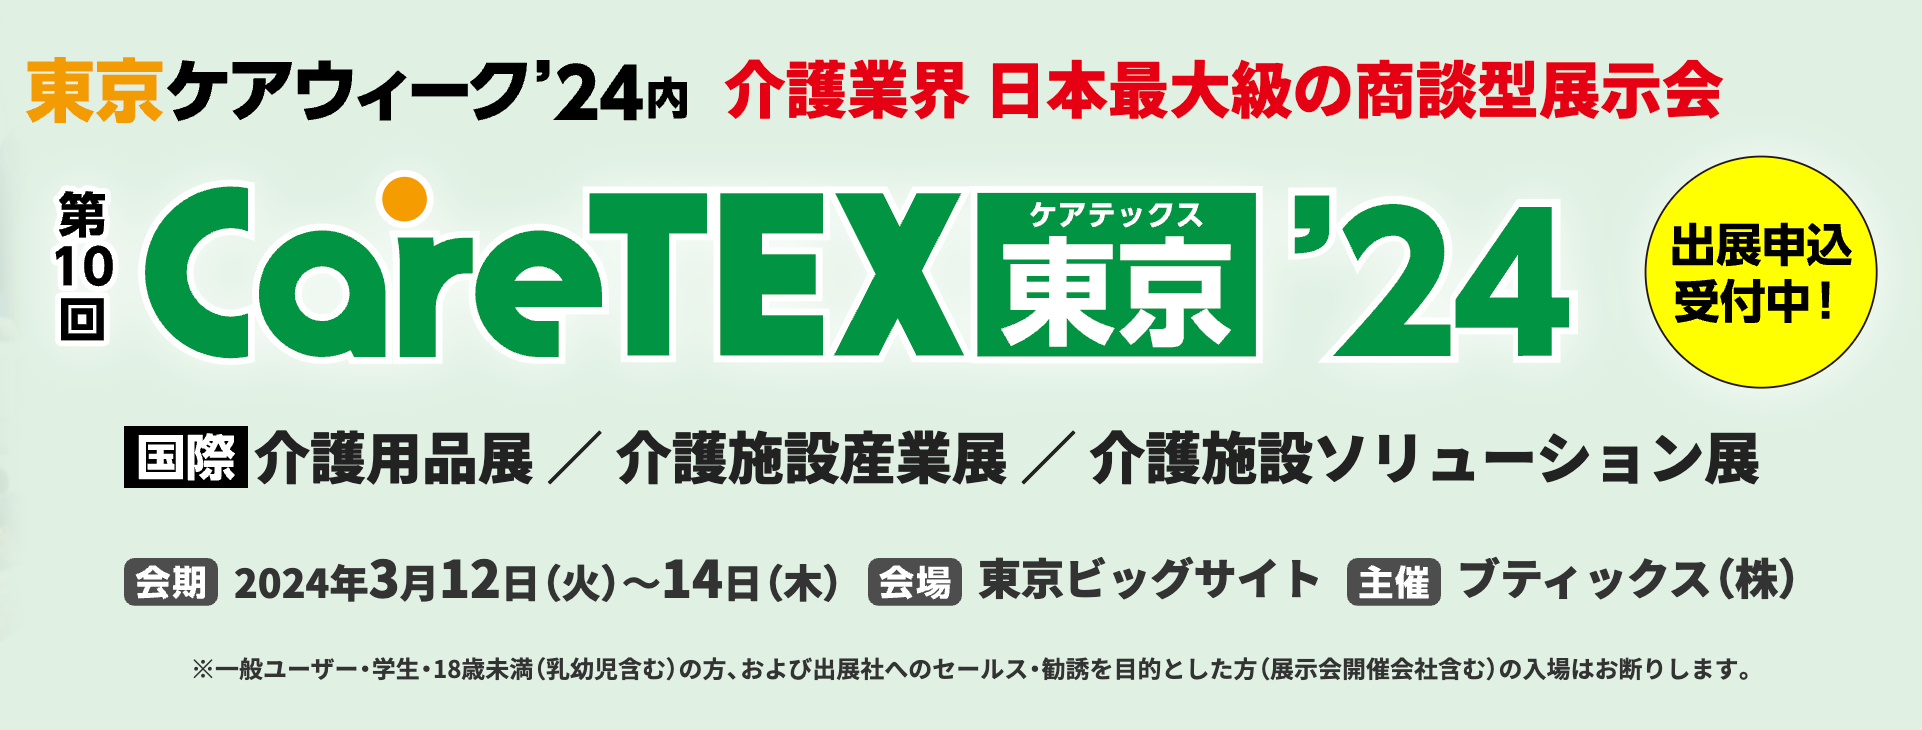 CareTEX東京’24